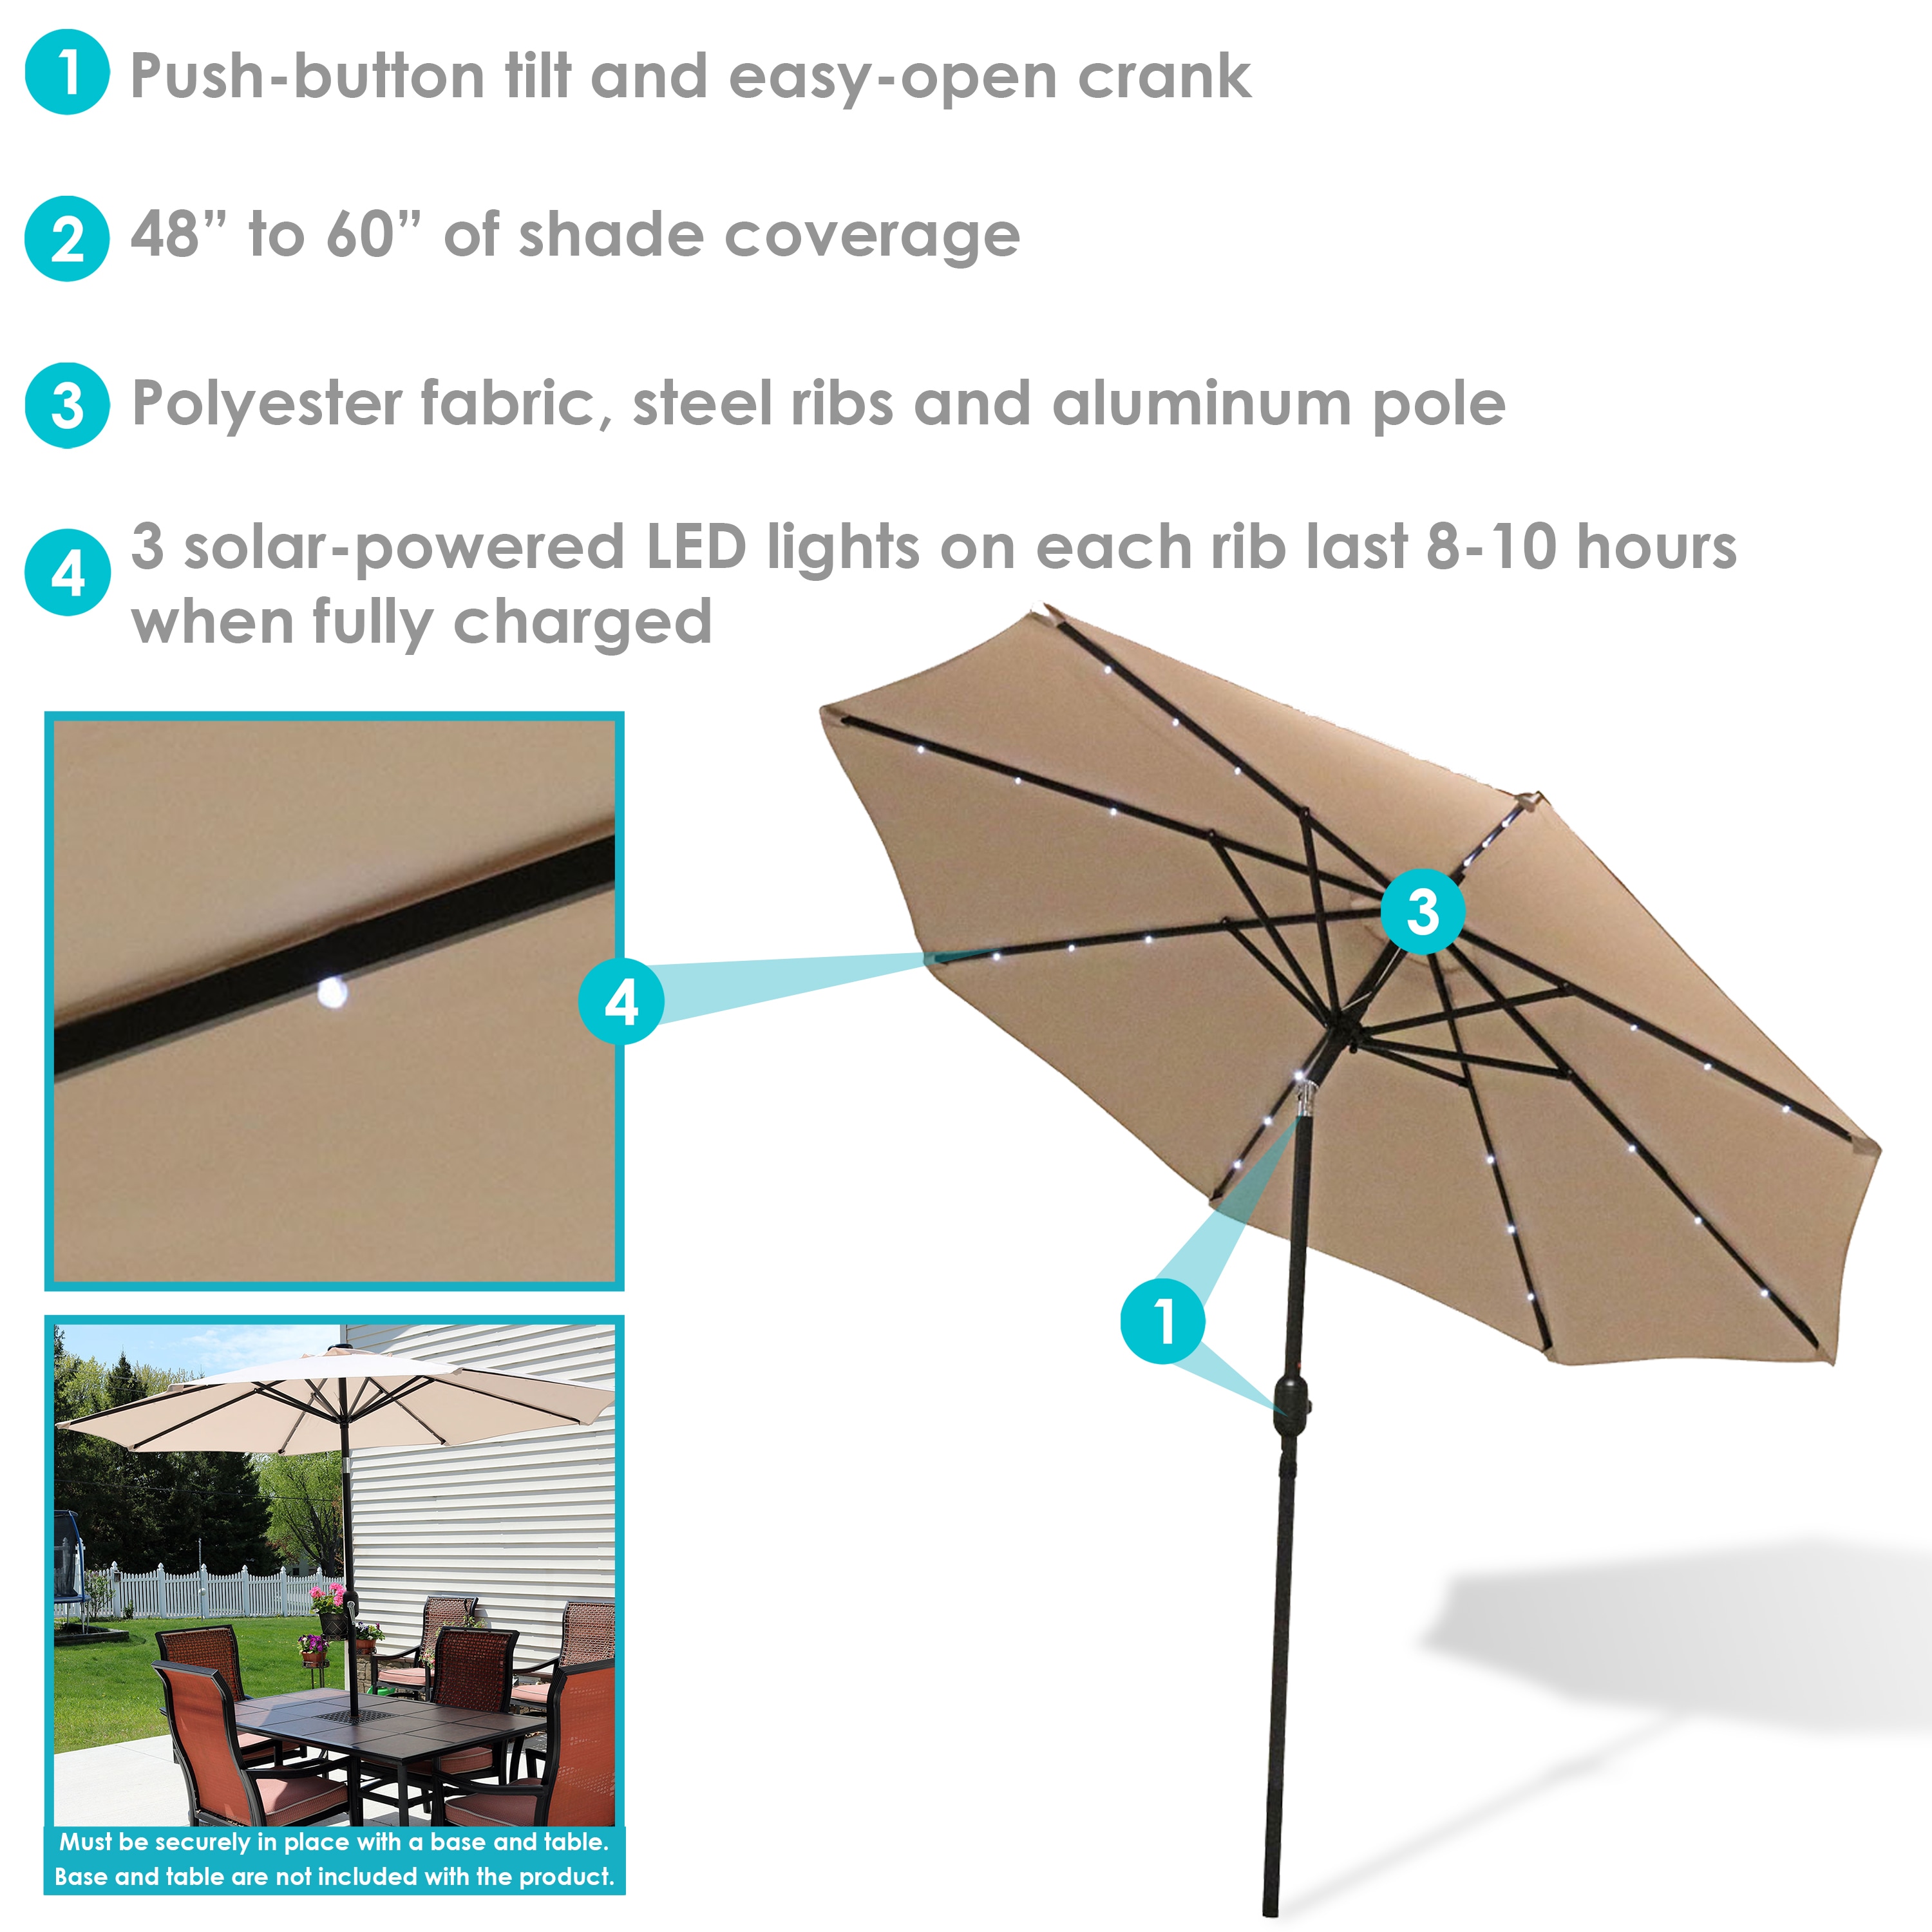 Light Tan Sunnyglade 9' Solar 24 LED Lighted Patio Umbrella with 8 Ribs/Tilt Adjustment and Crank Lift System